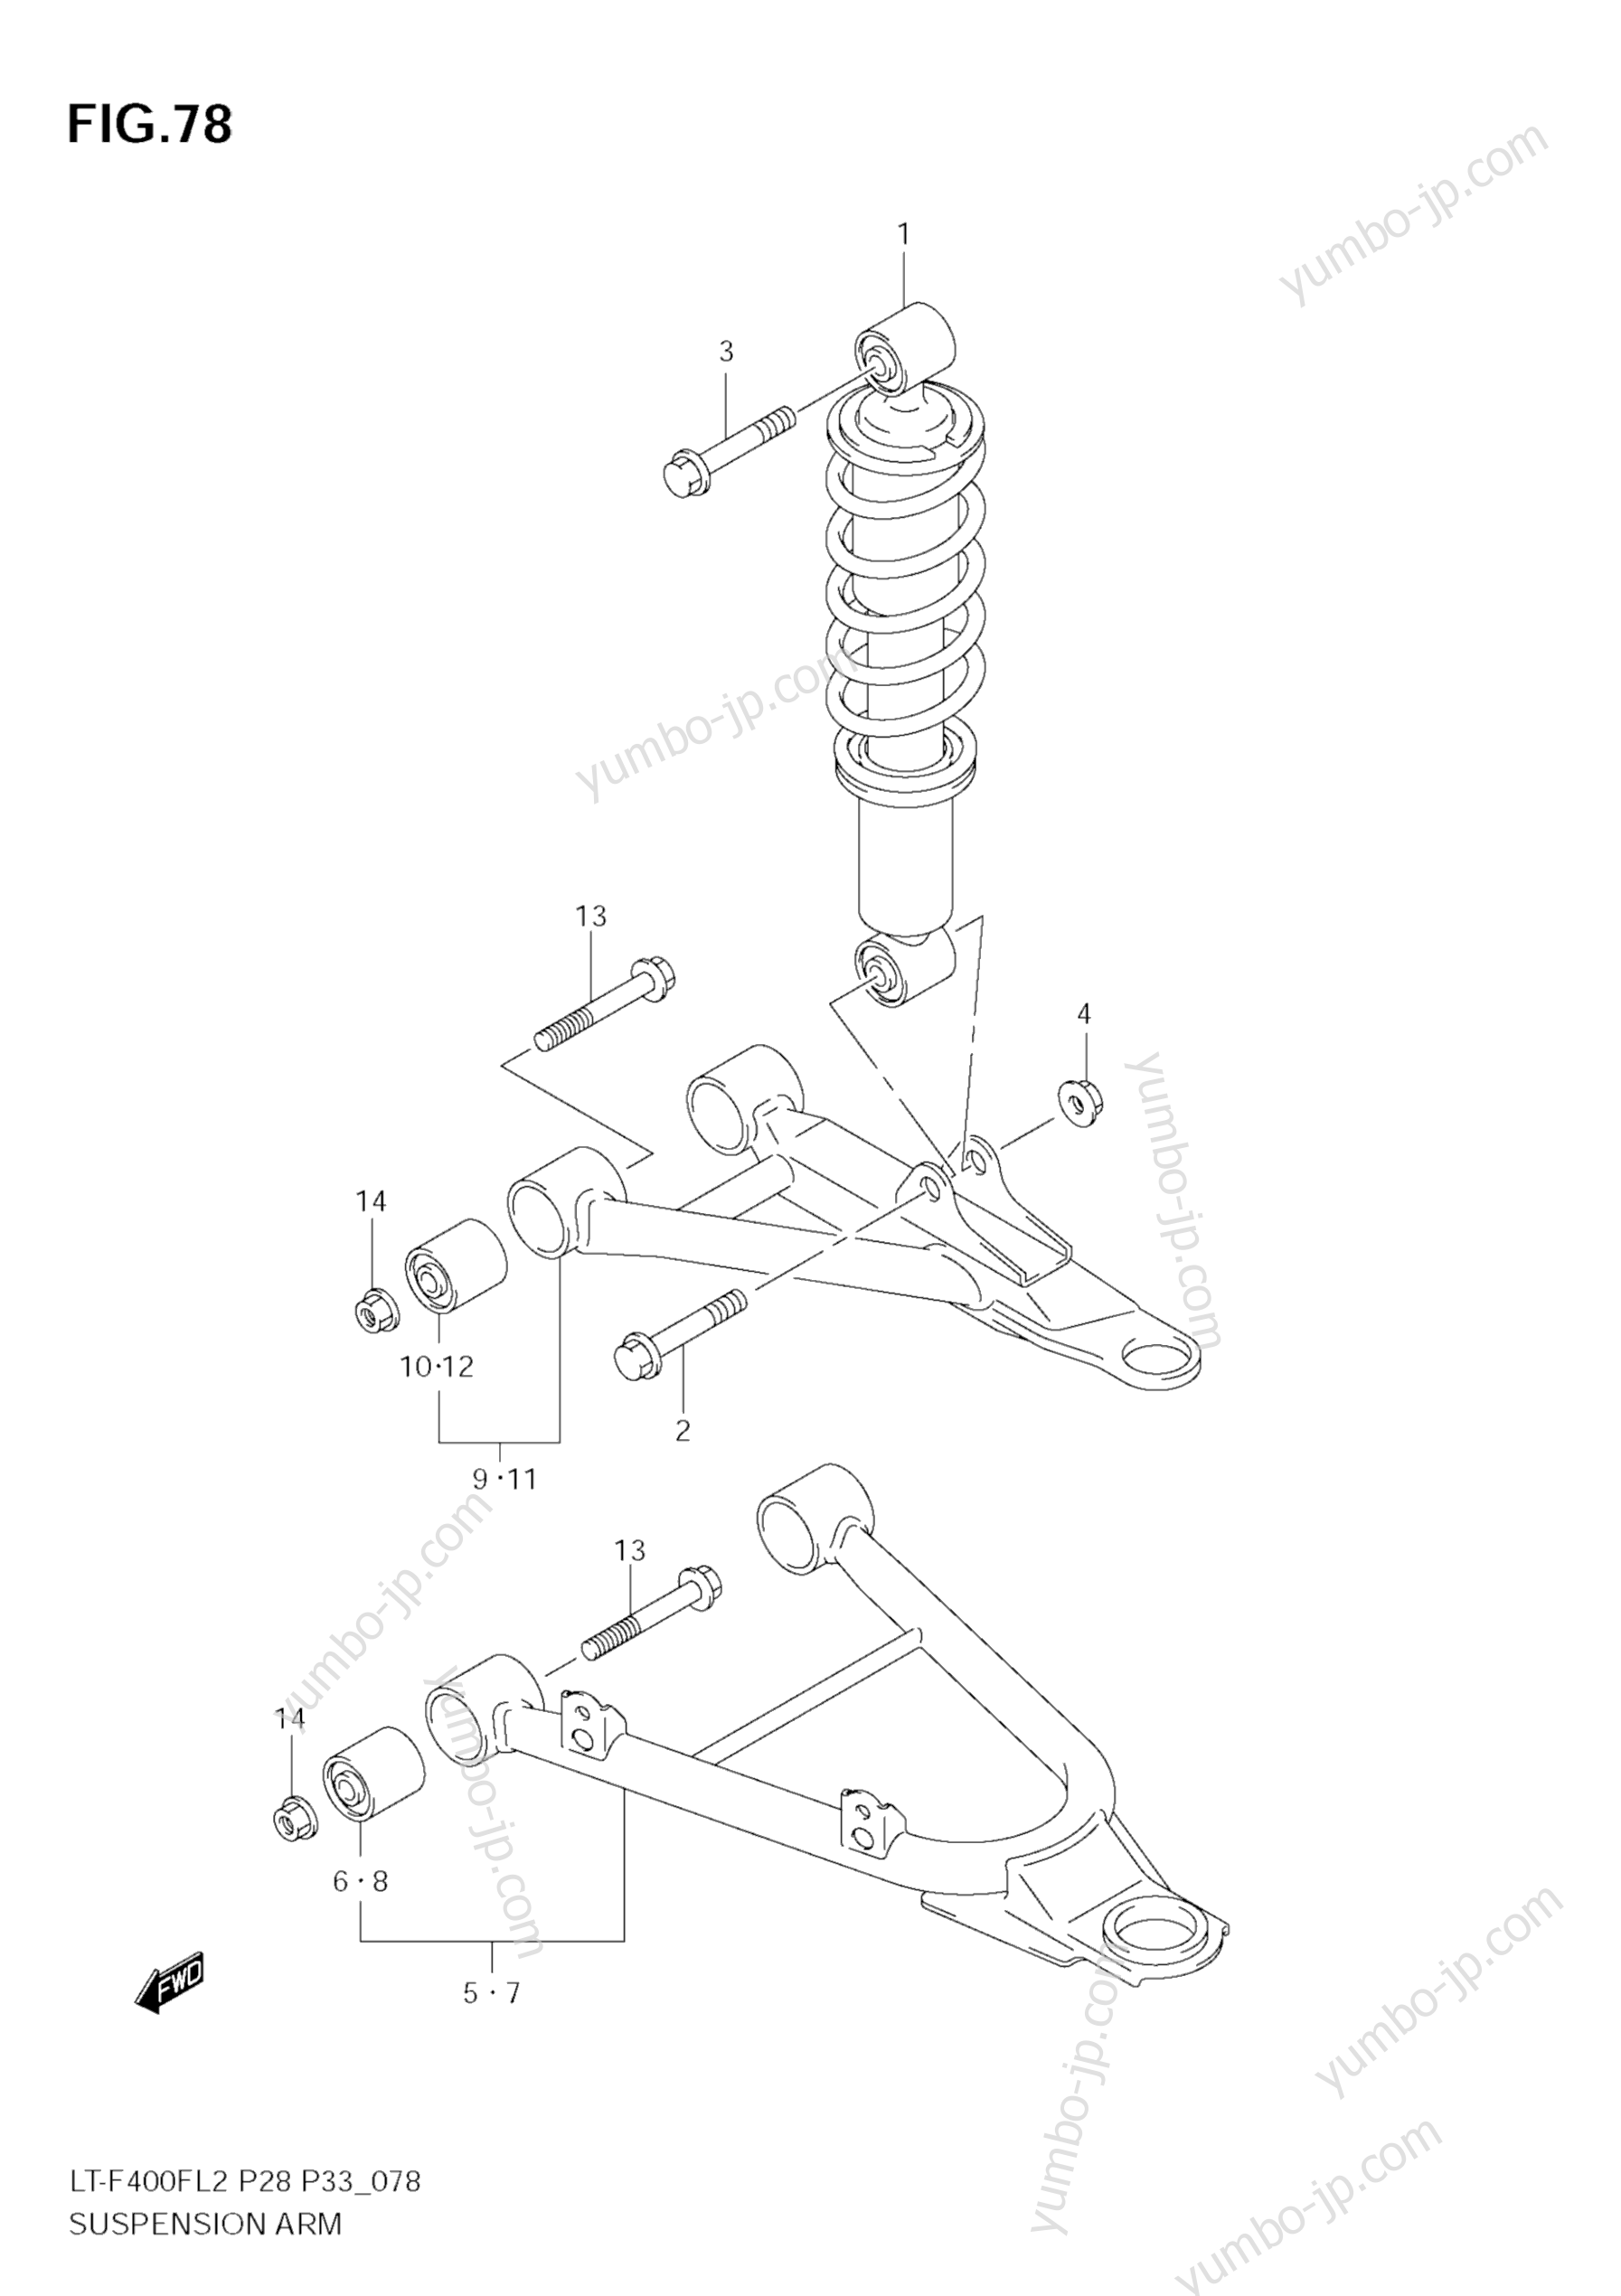 SUSPENSION ARM for ATVs SUZUKI KingQuad (LT-F400F) 2012 year